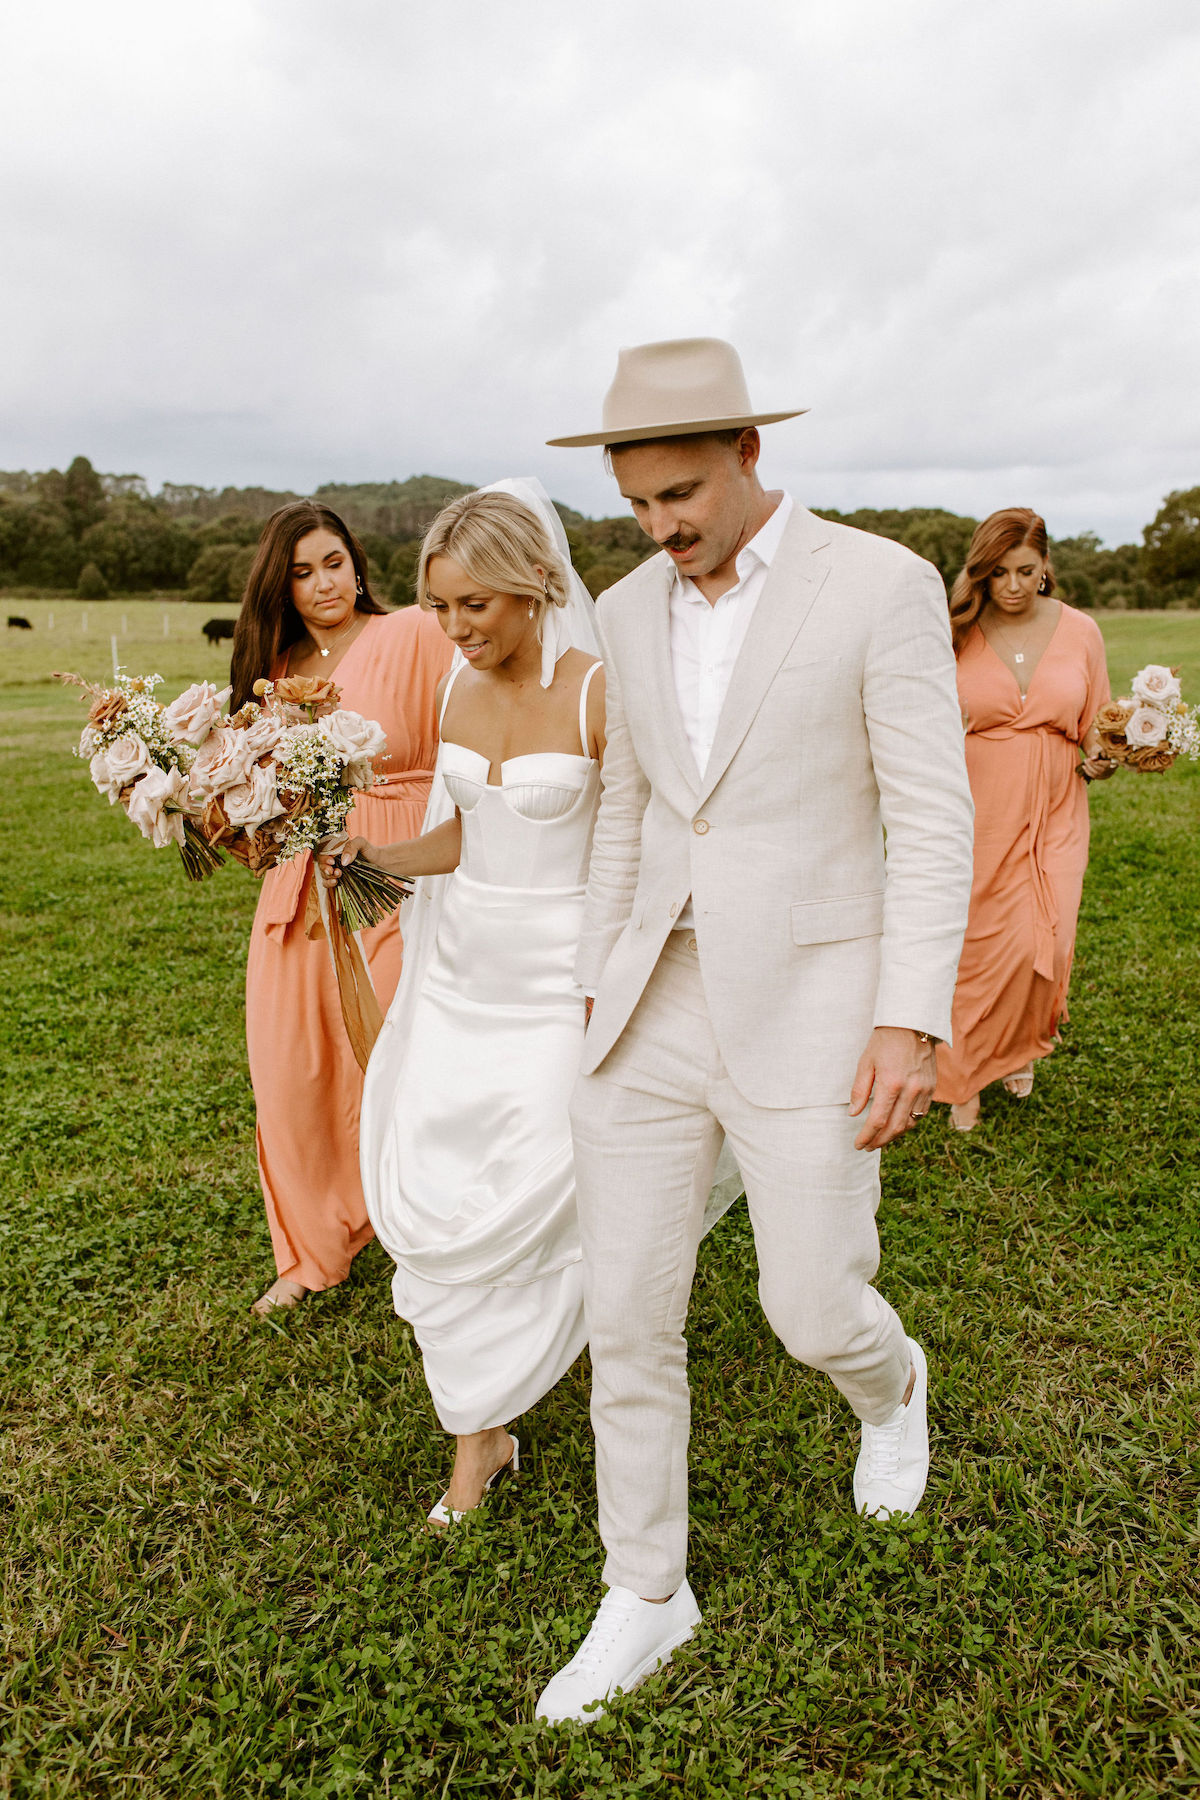 Real Wedding: Sarah + Kurt at Frida's Field, Byron Bay | The Events Lounge